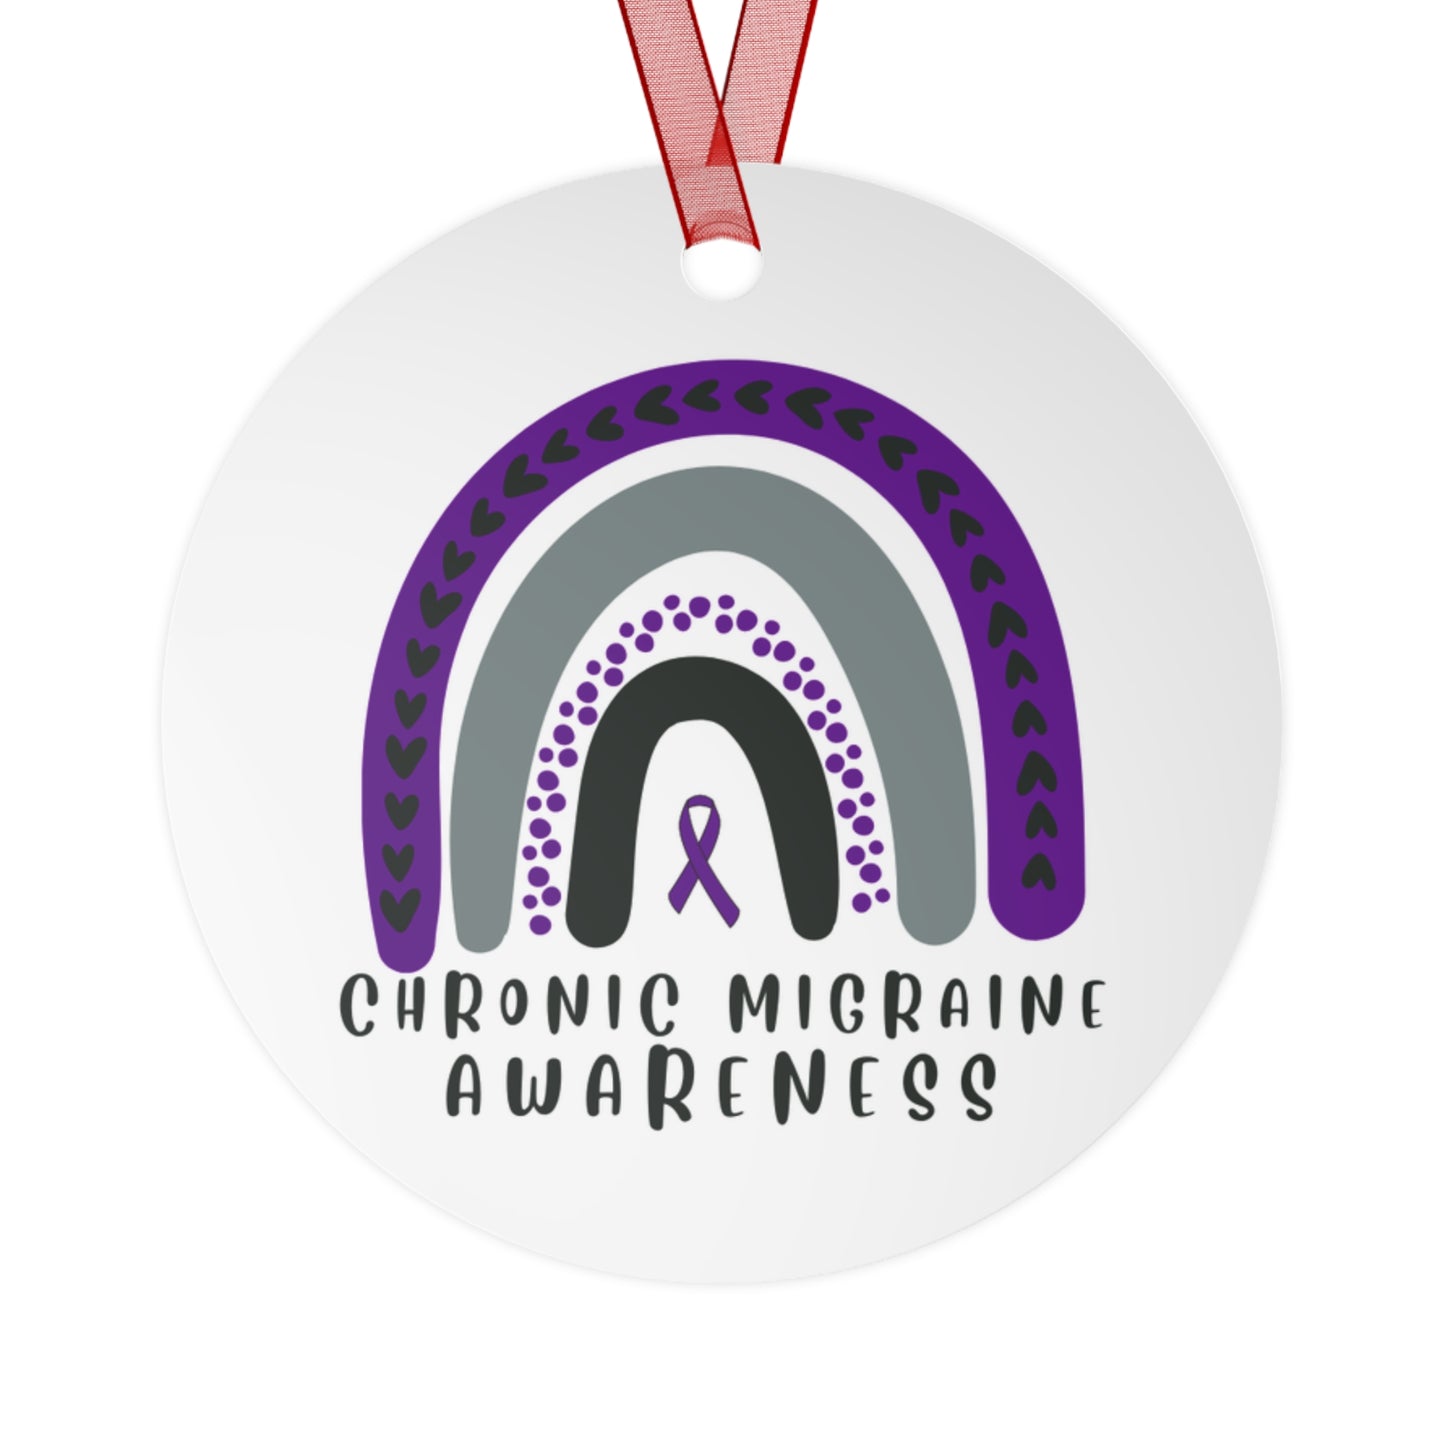 Chronic Migraine Awareness Christmas Ornament Stocking Stuffer